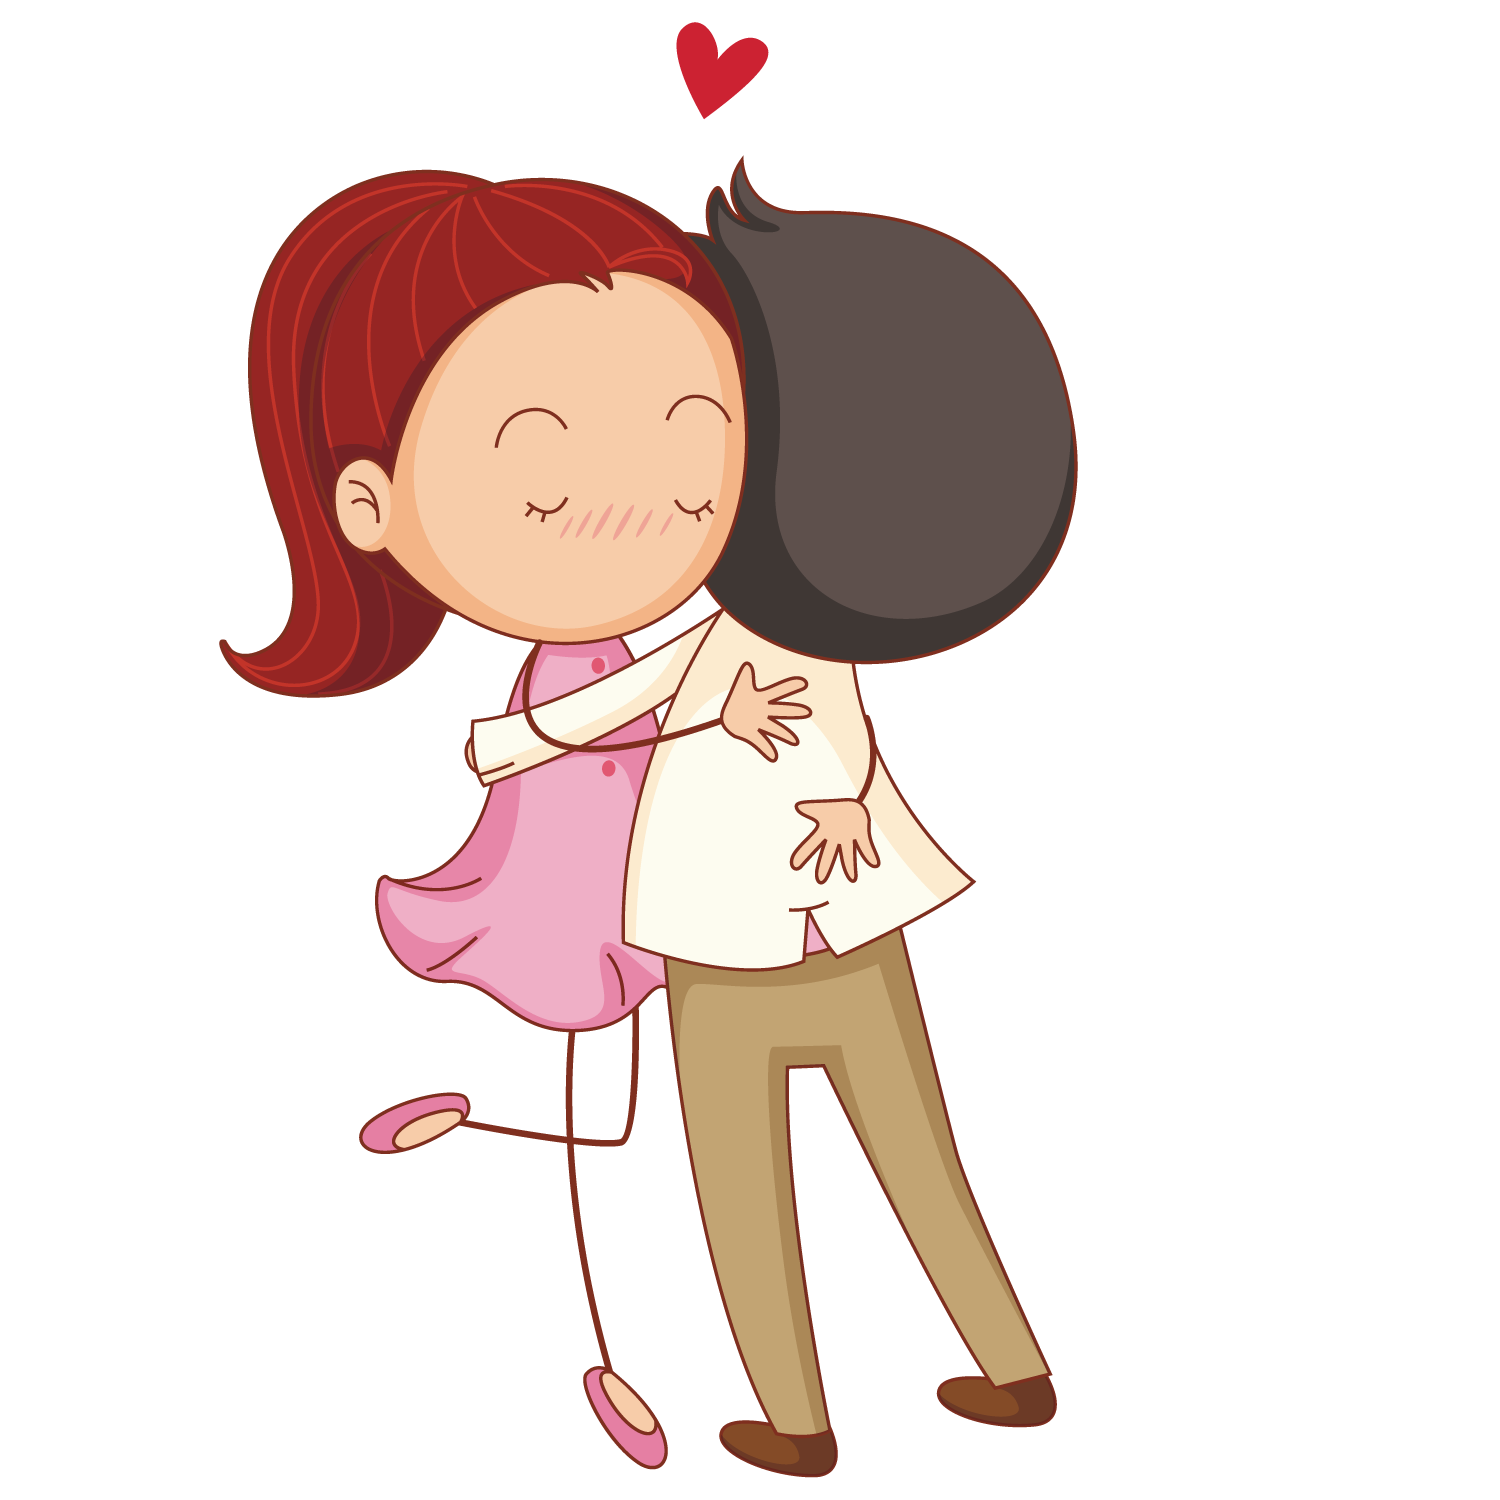 Hug clipart intimacy. Cartoon drawing illustration embrace